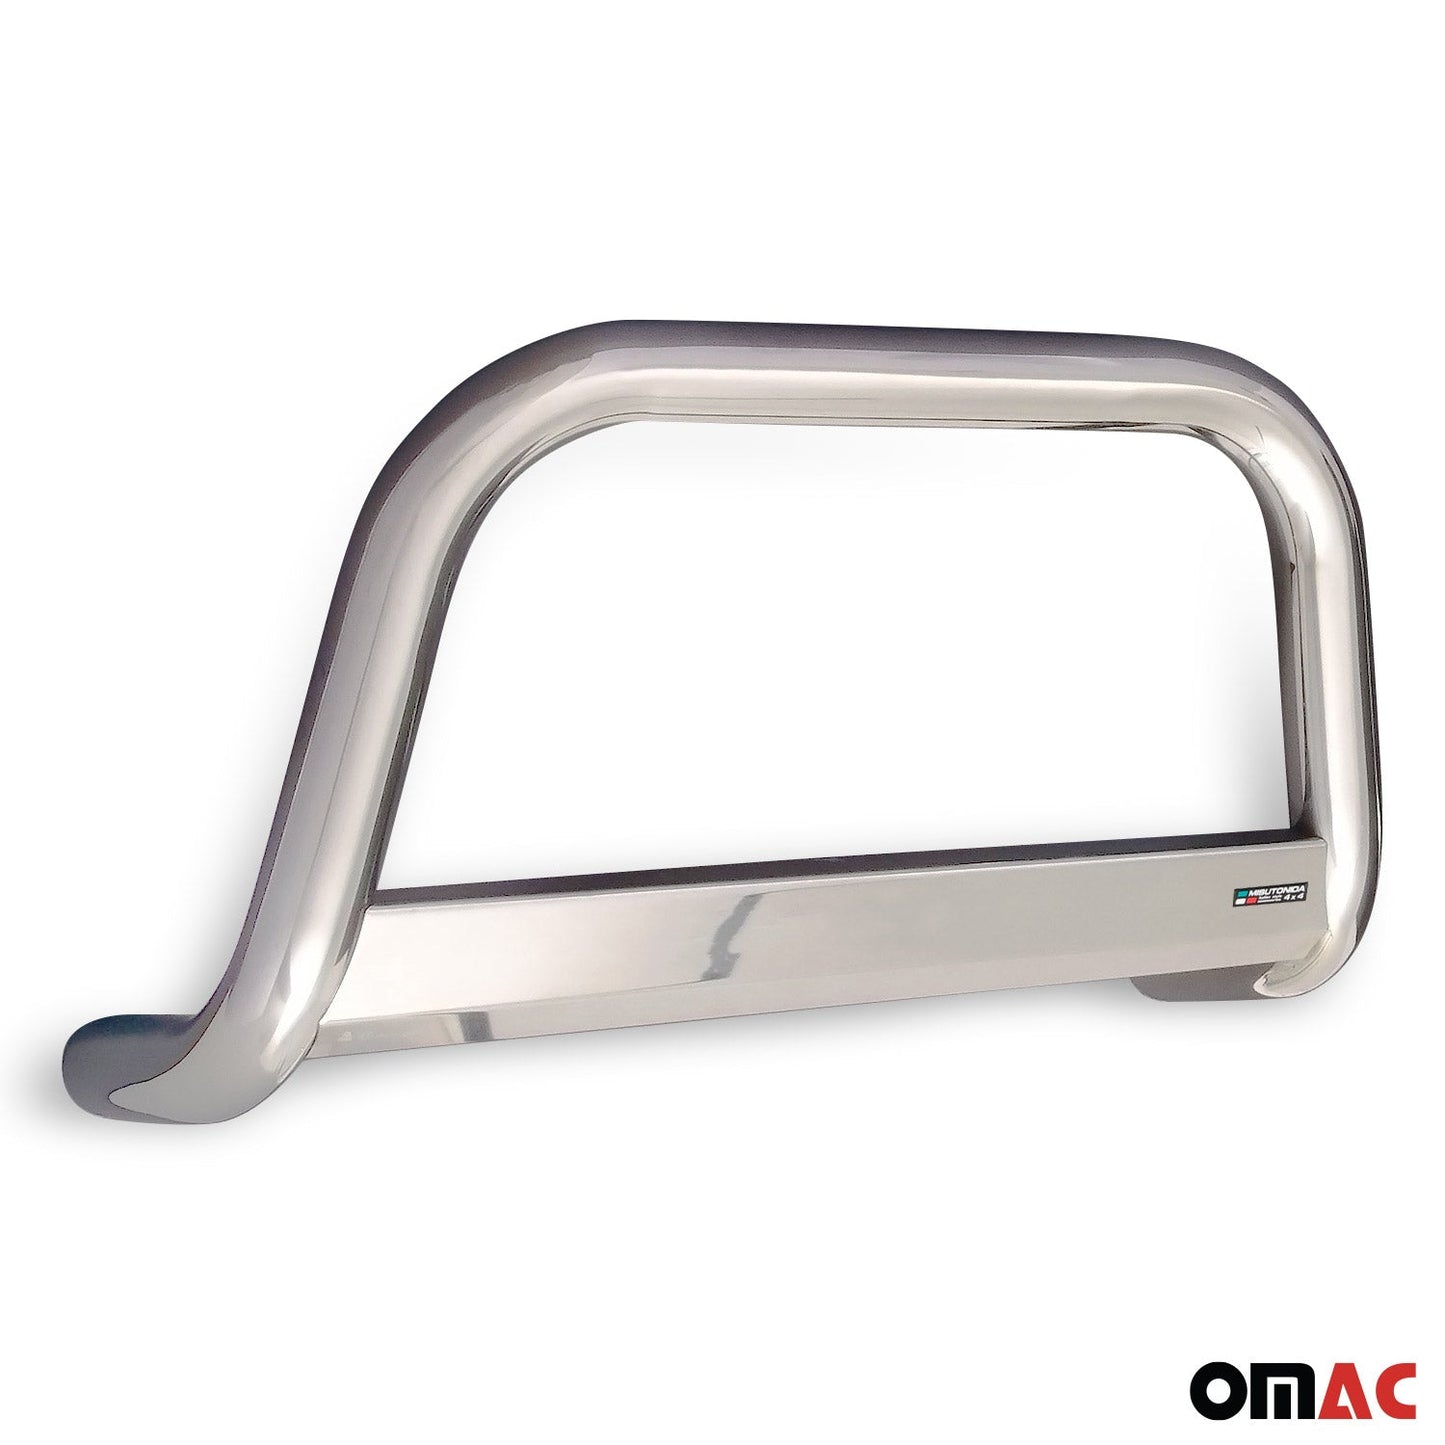 OMAC Bull Bar Push Front Bumper Grille for Mercedes Sprinter W906 2014-2018 Silver 4724MSBB098F